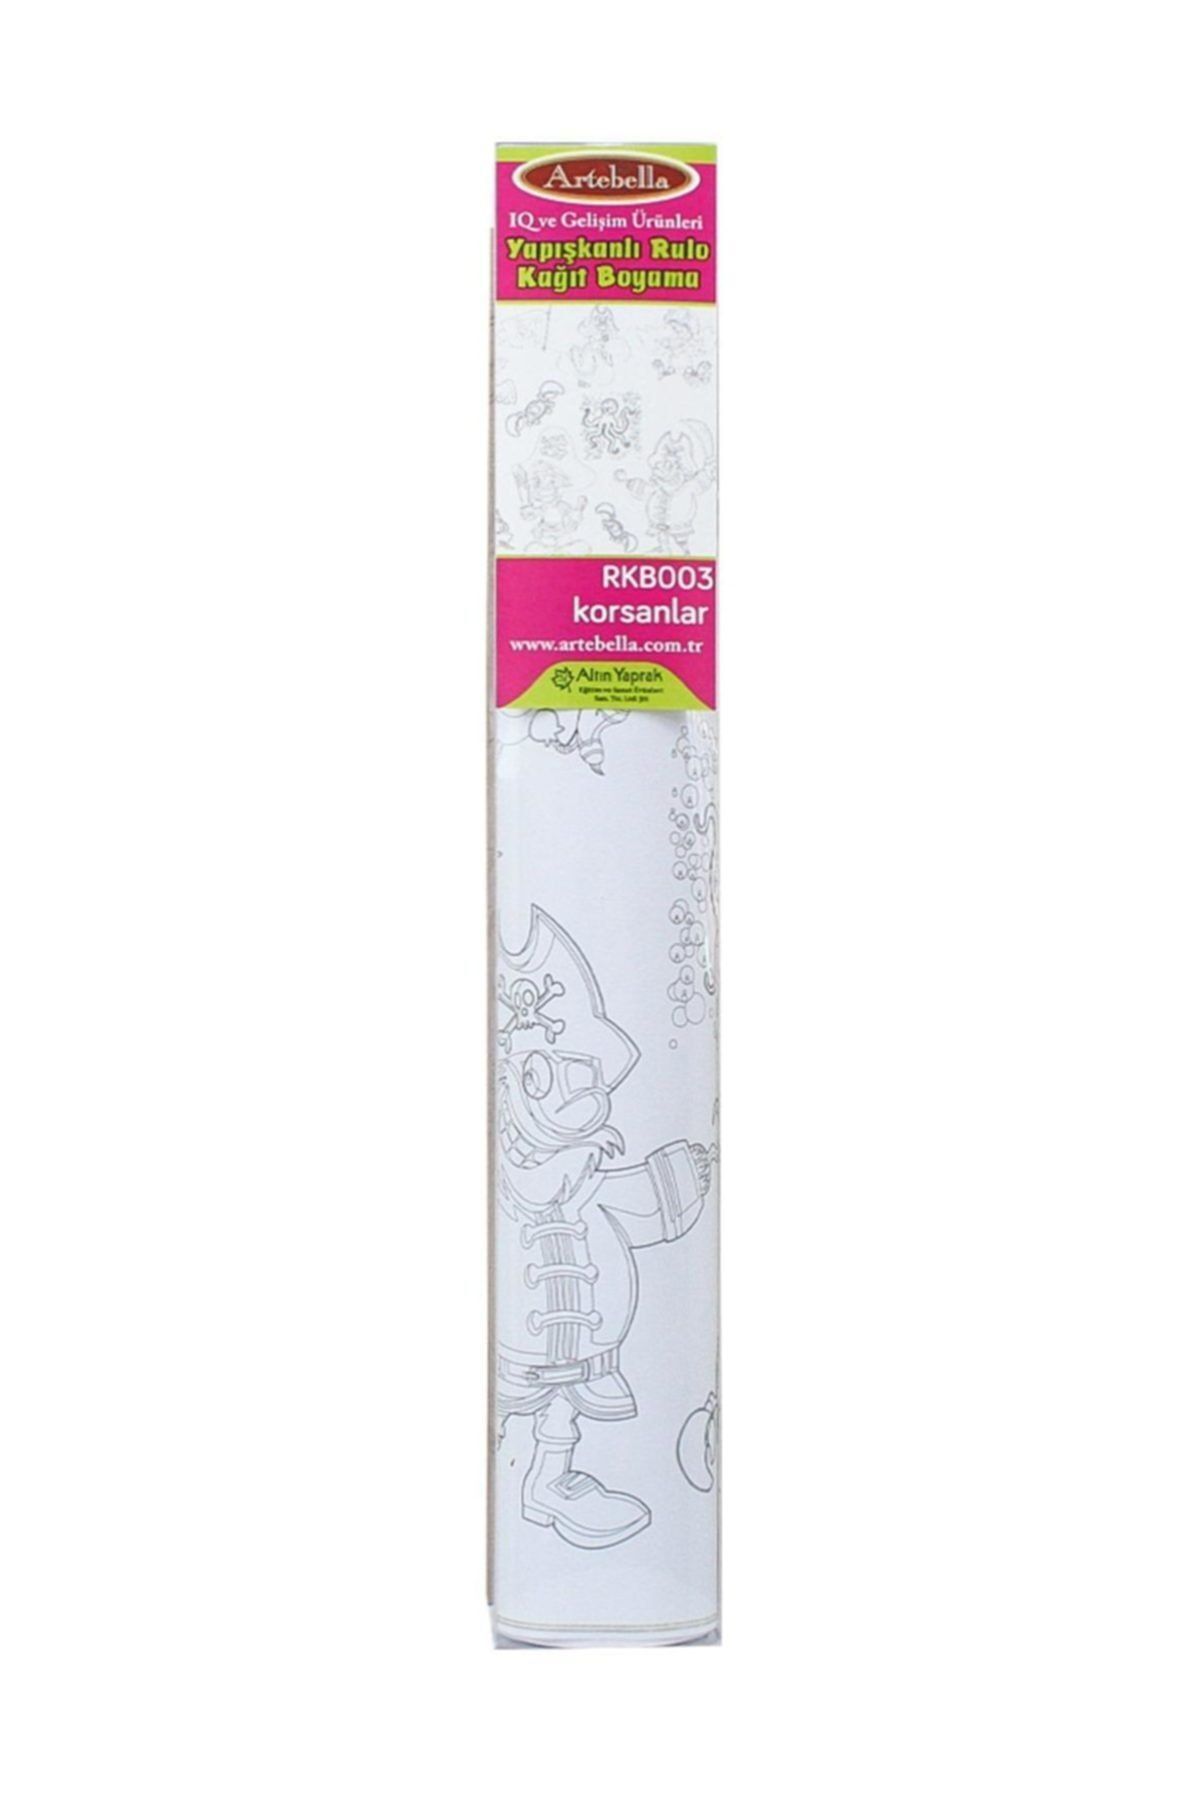 Artebella Yapışkanlı Rulo Kağıt Boyama 33x100cm "korsanlar" Rkb003